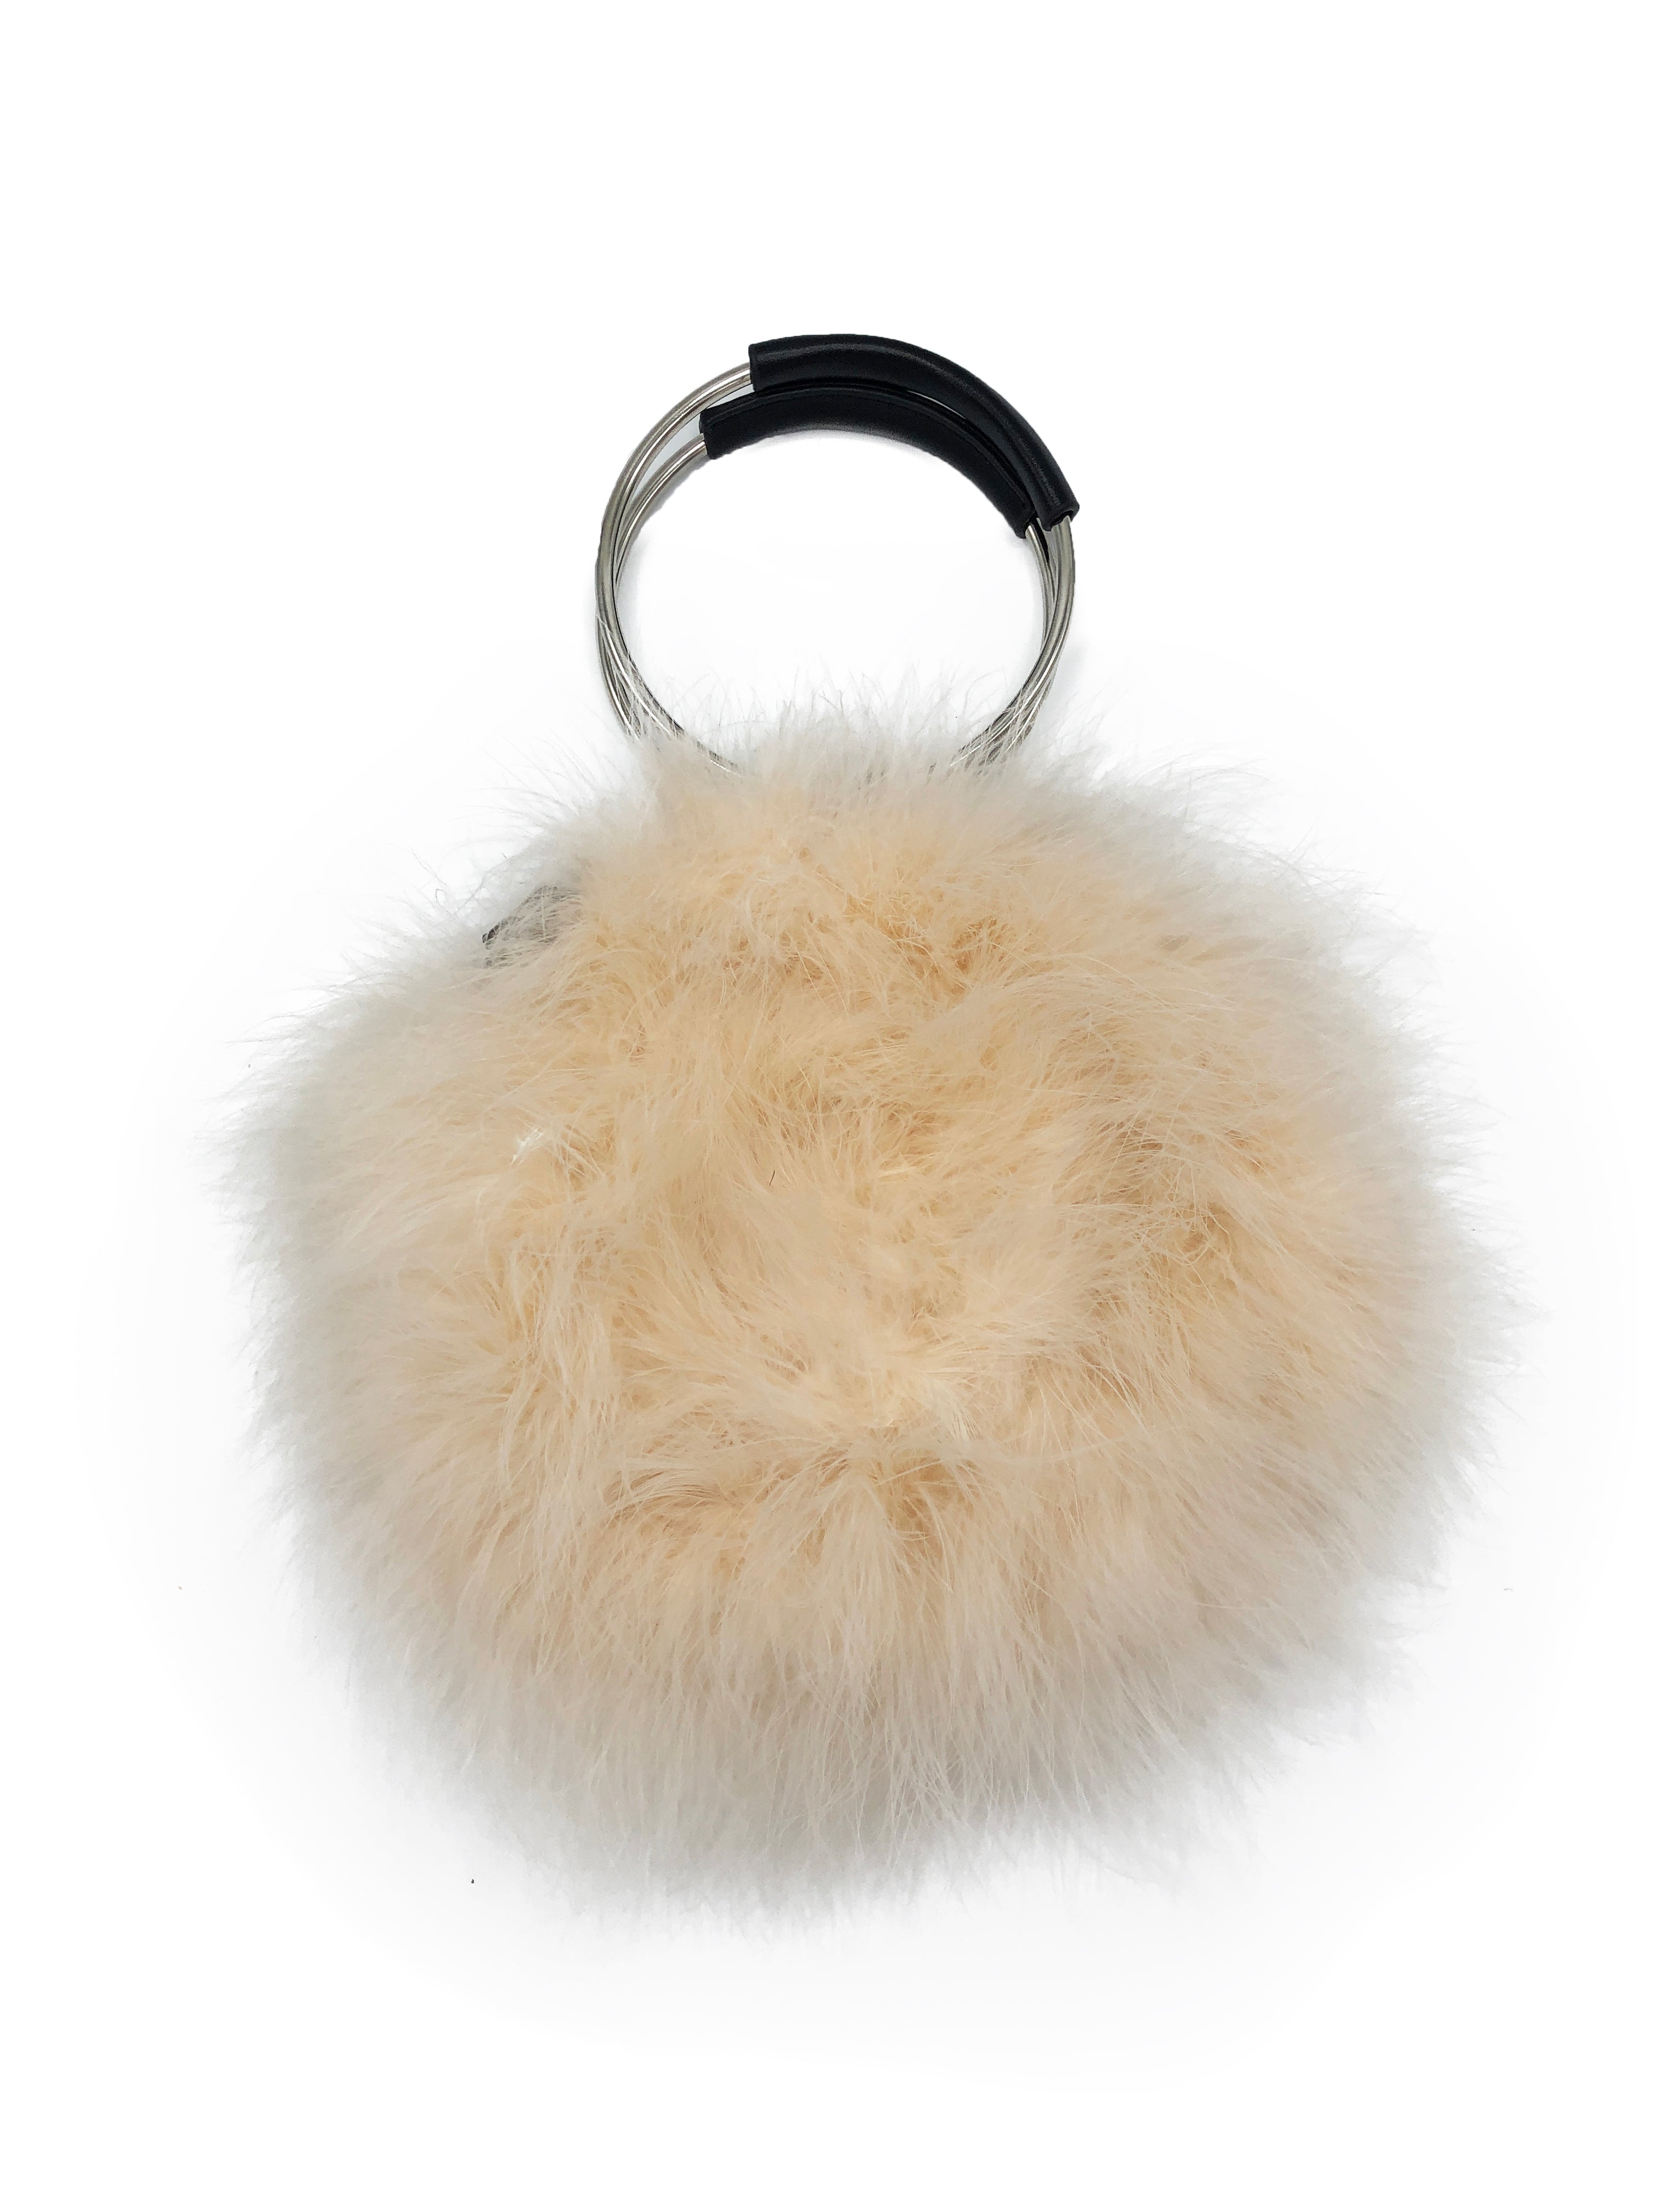 Feathered Handbag with Hoop Handle and Chain - paulamariecollection